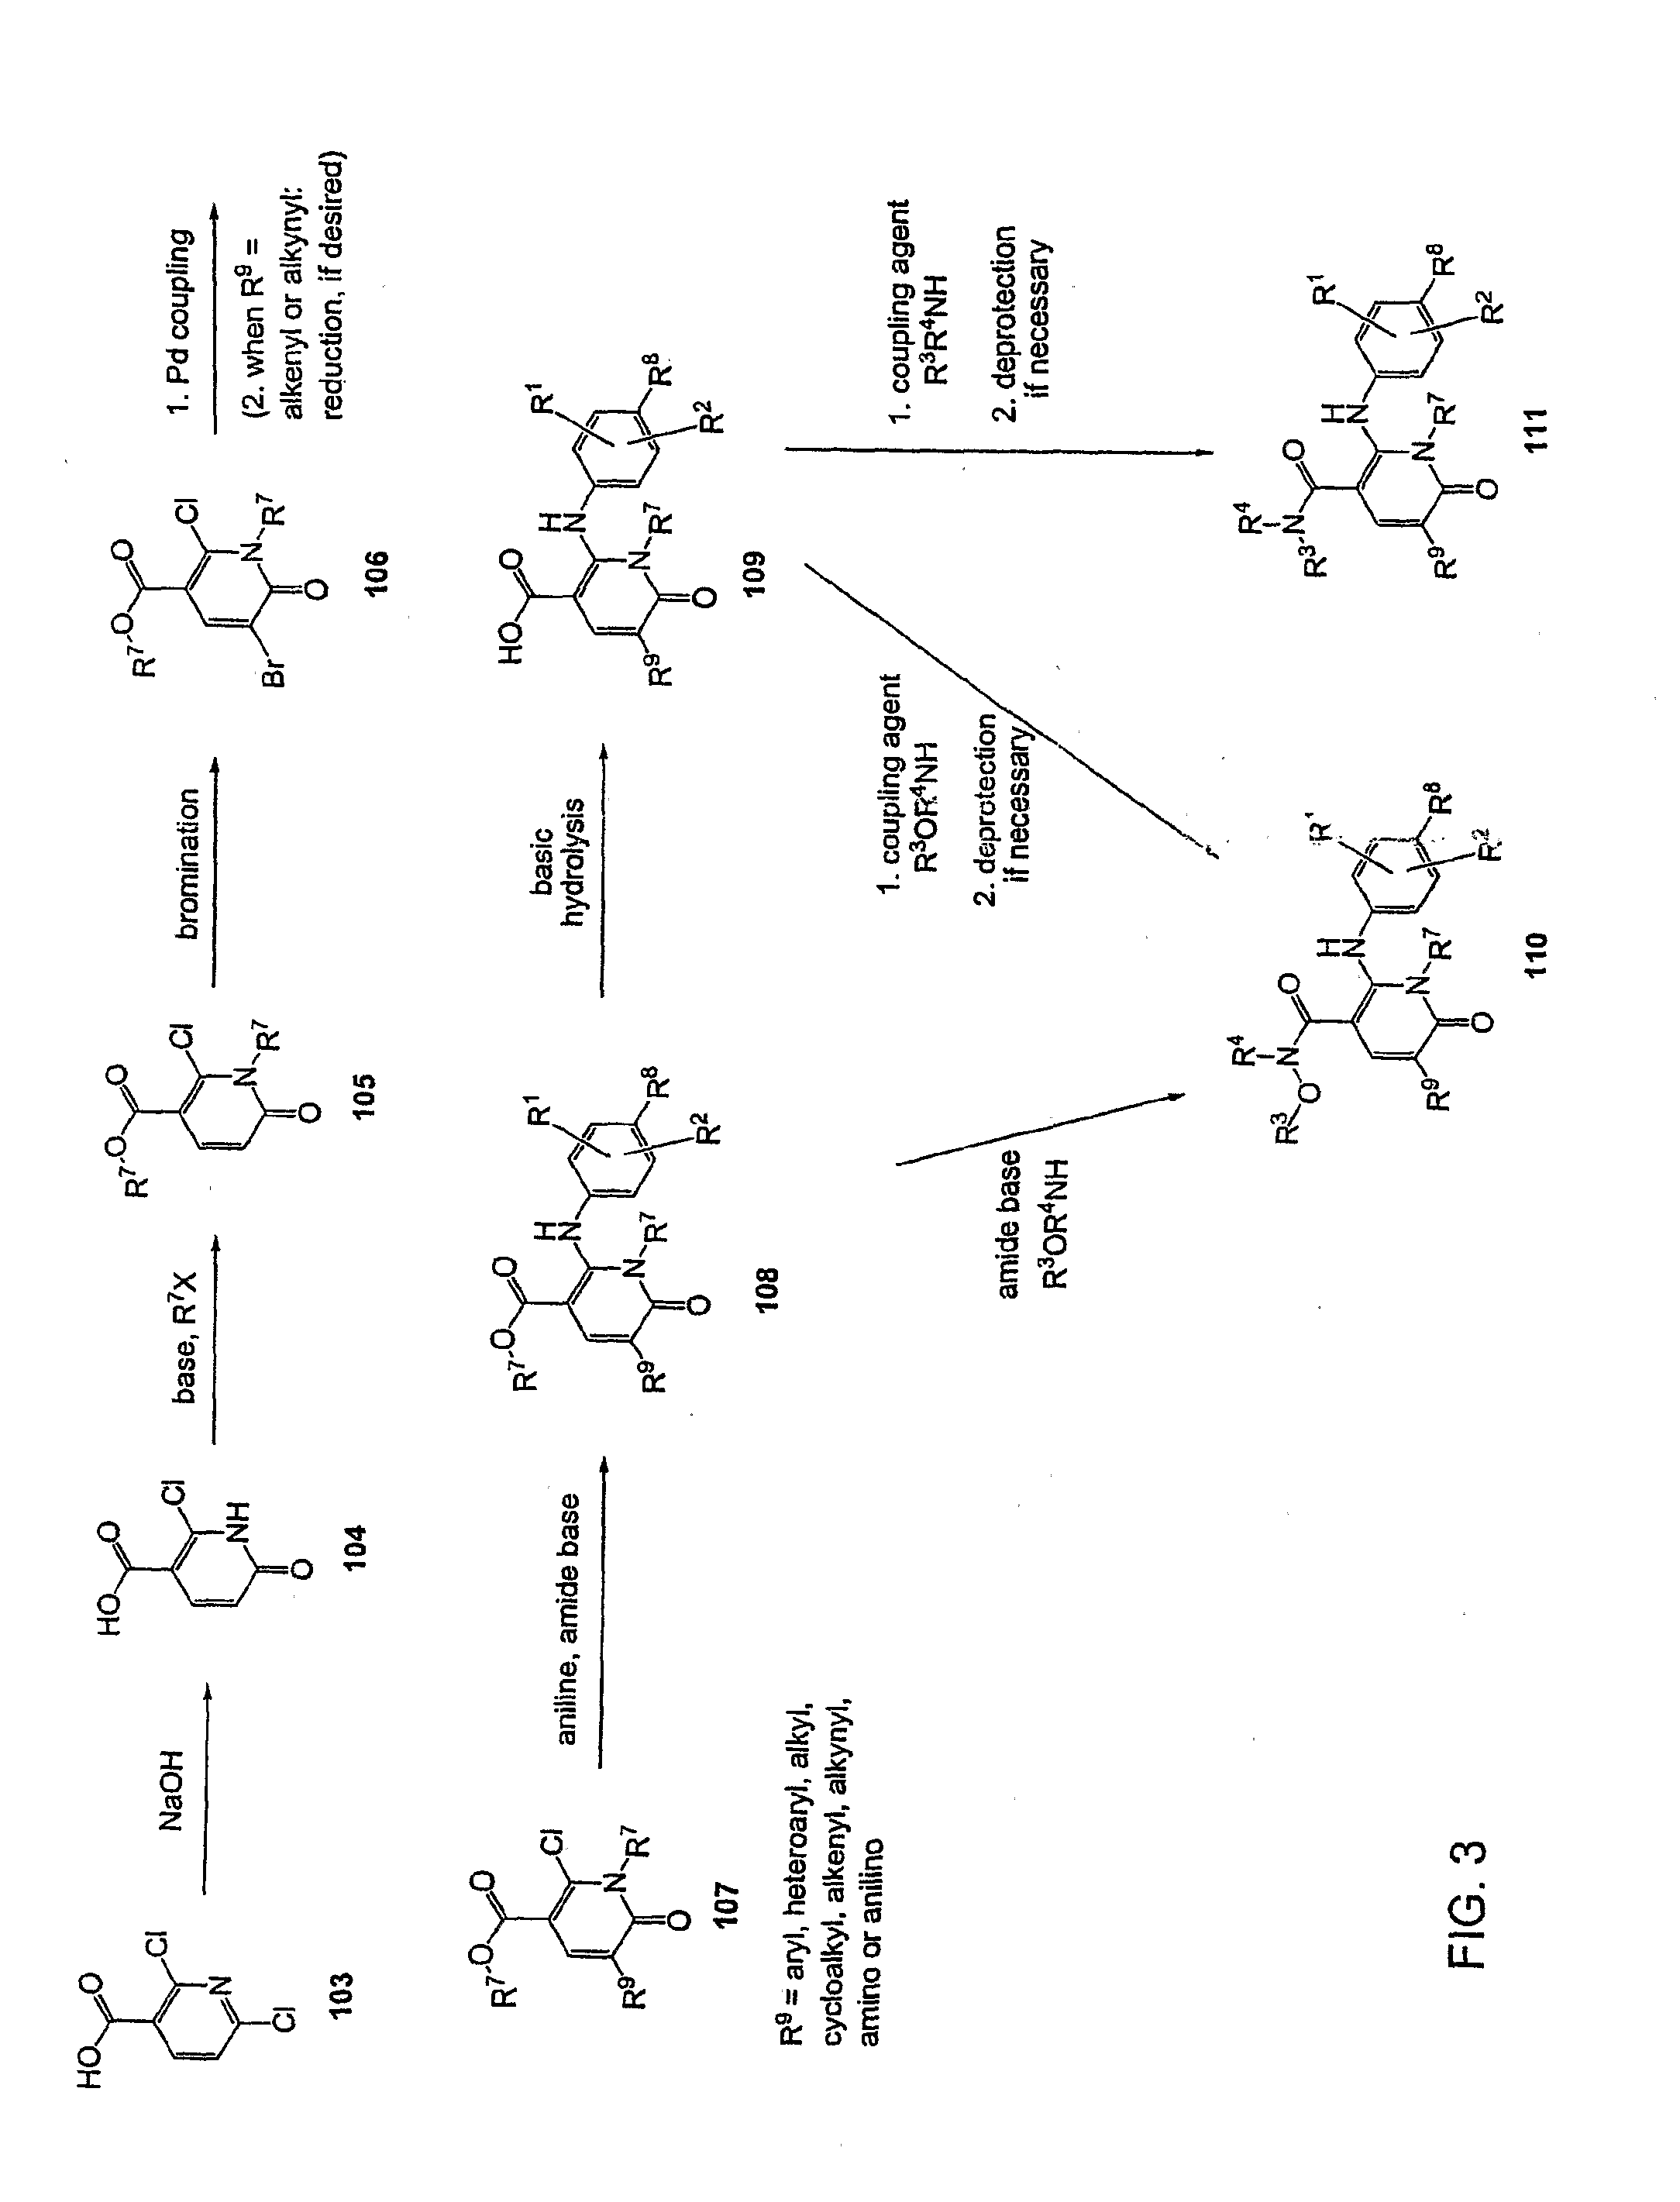 Heterocyclic Inhibitors of Mek and Methods of Use Thereof